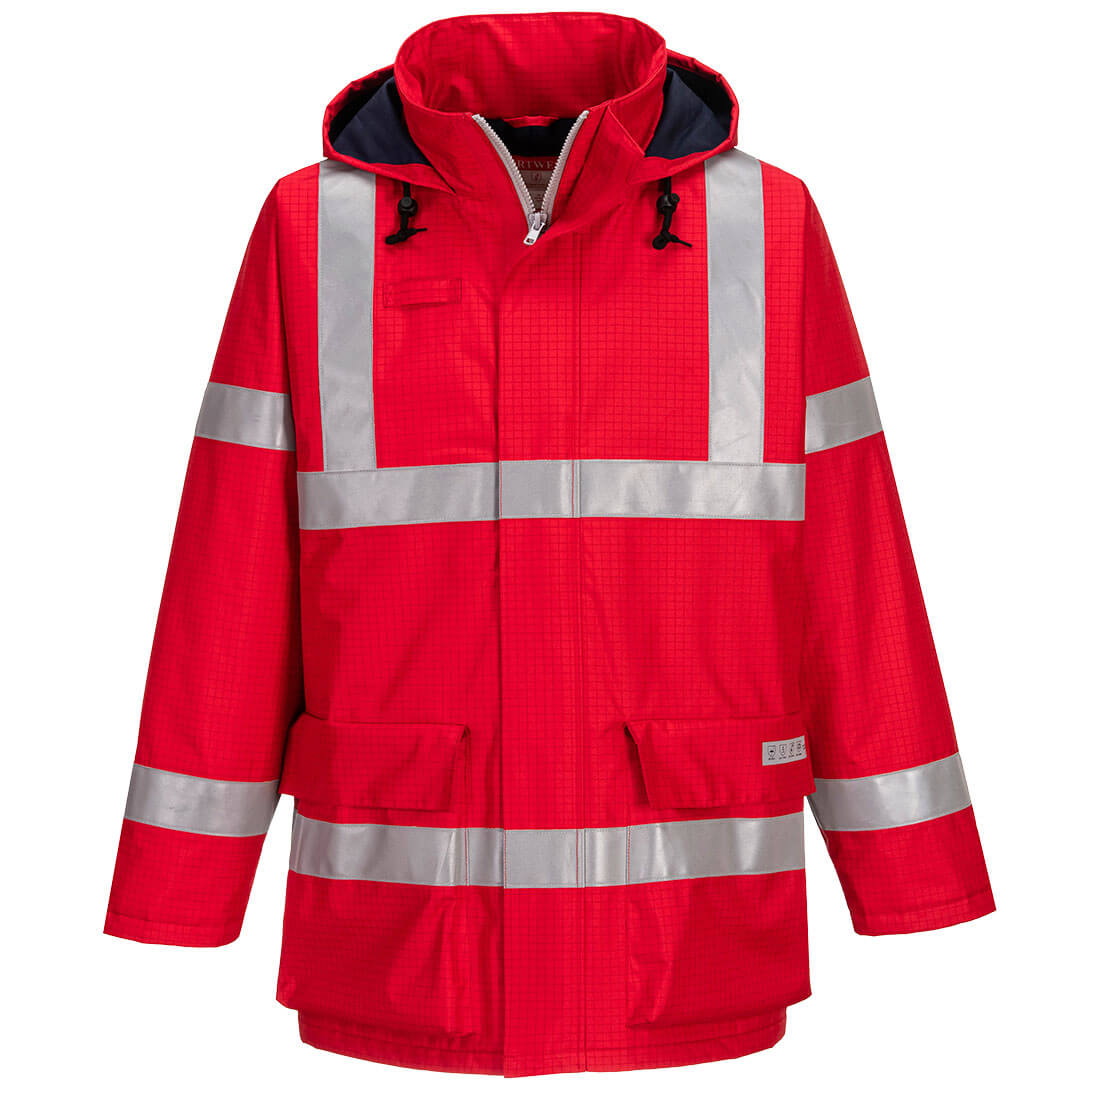 Bizflame Rain Anti-Static FR Jacket - Red